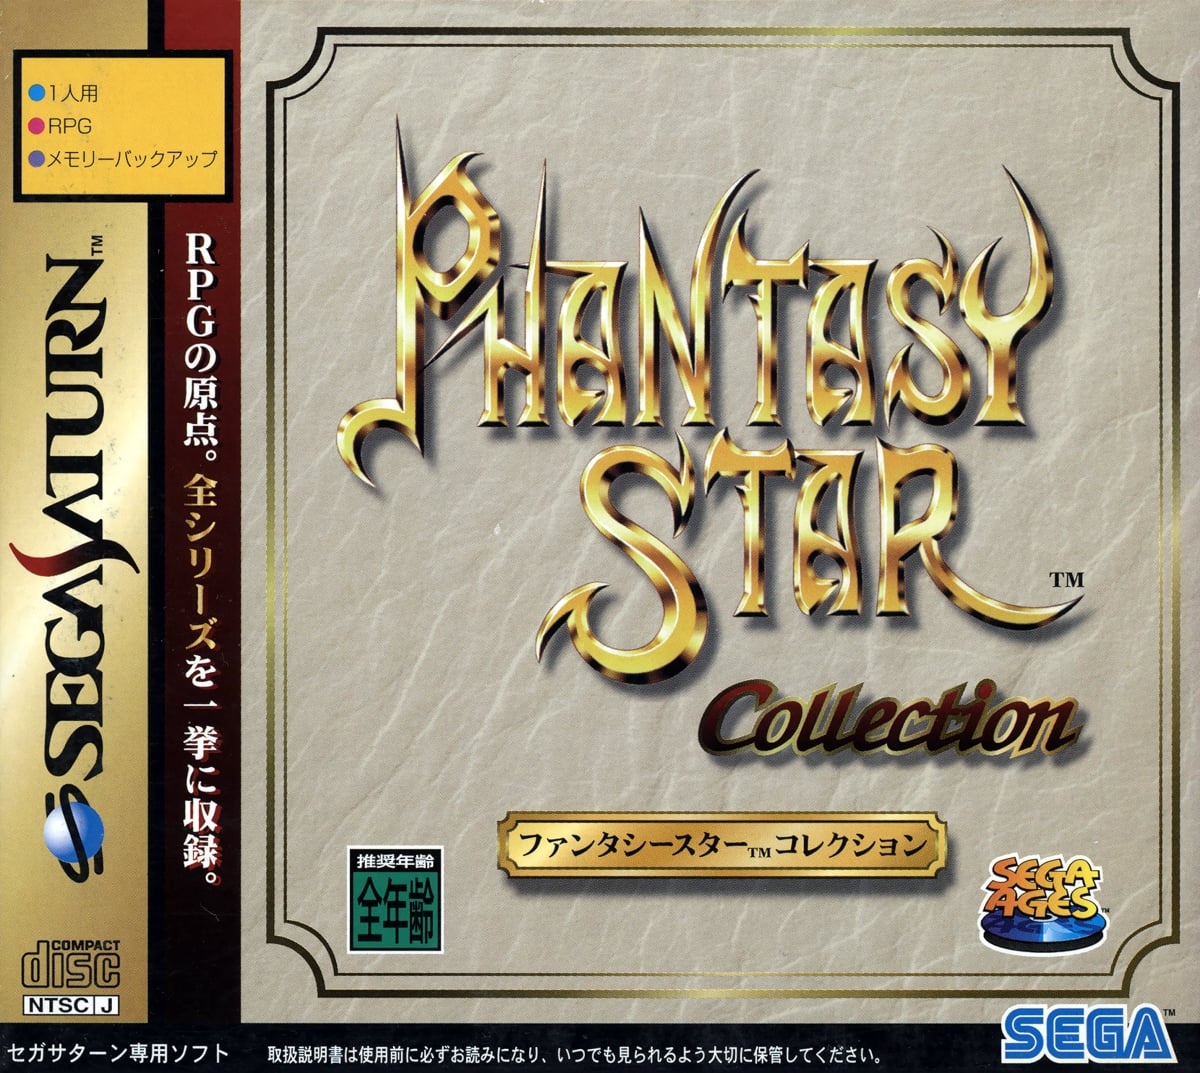 Sega Ages Phantasy Star Collection cover